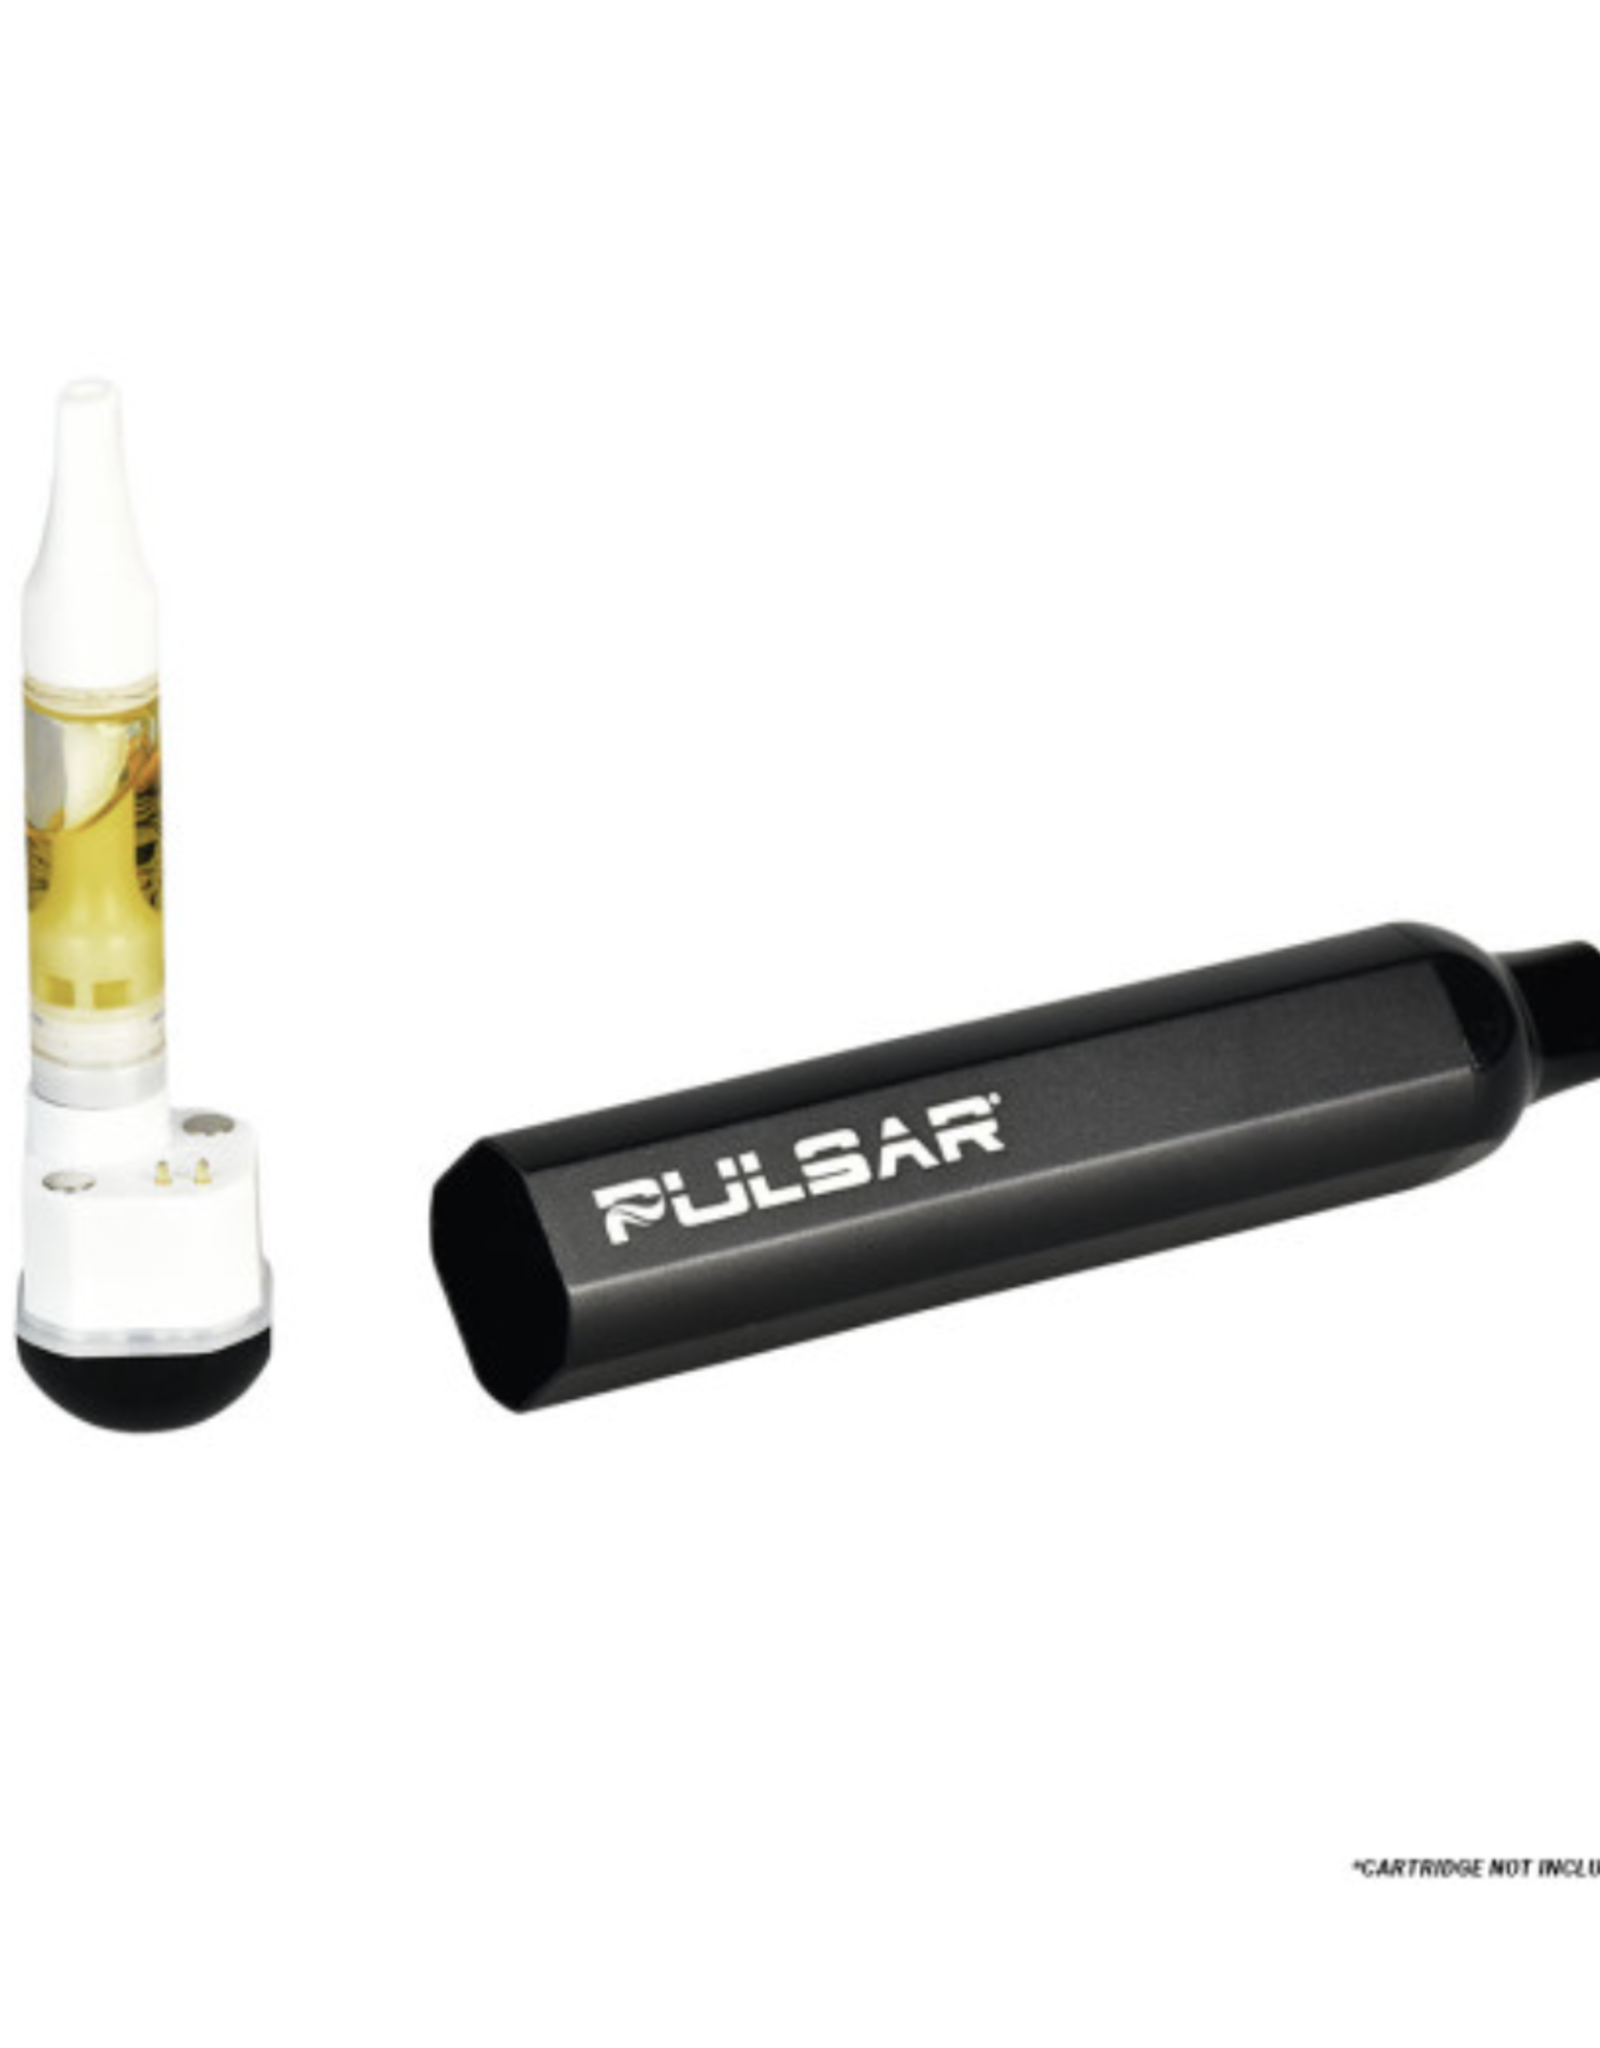 Pulsar Pulsar 510 DL Auto-Draw Variable Voltage 320mAh Battery